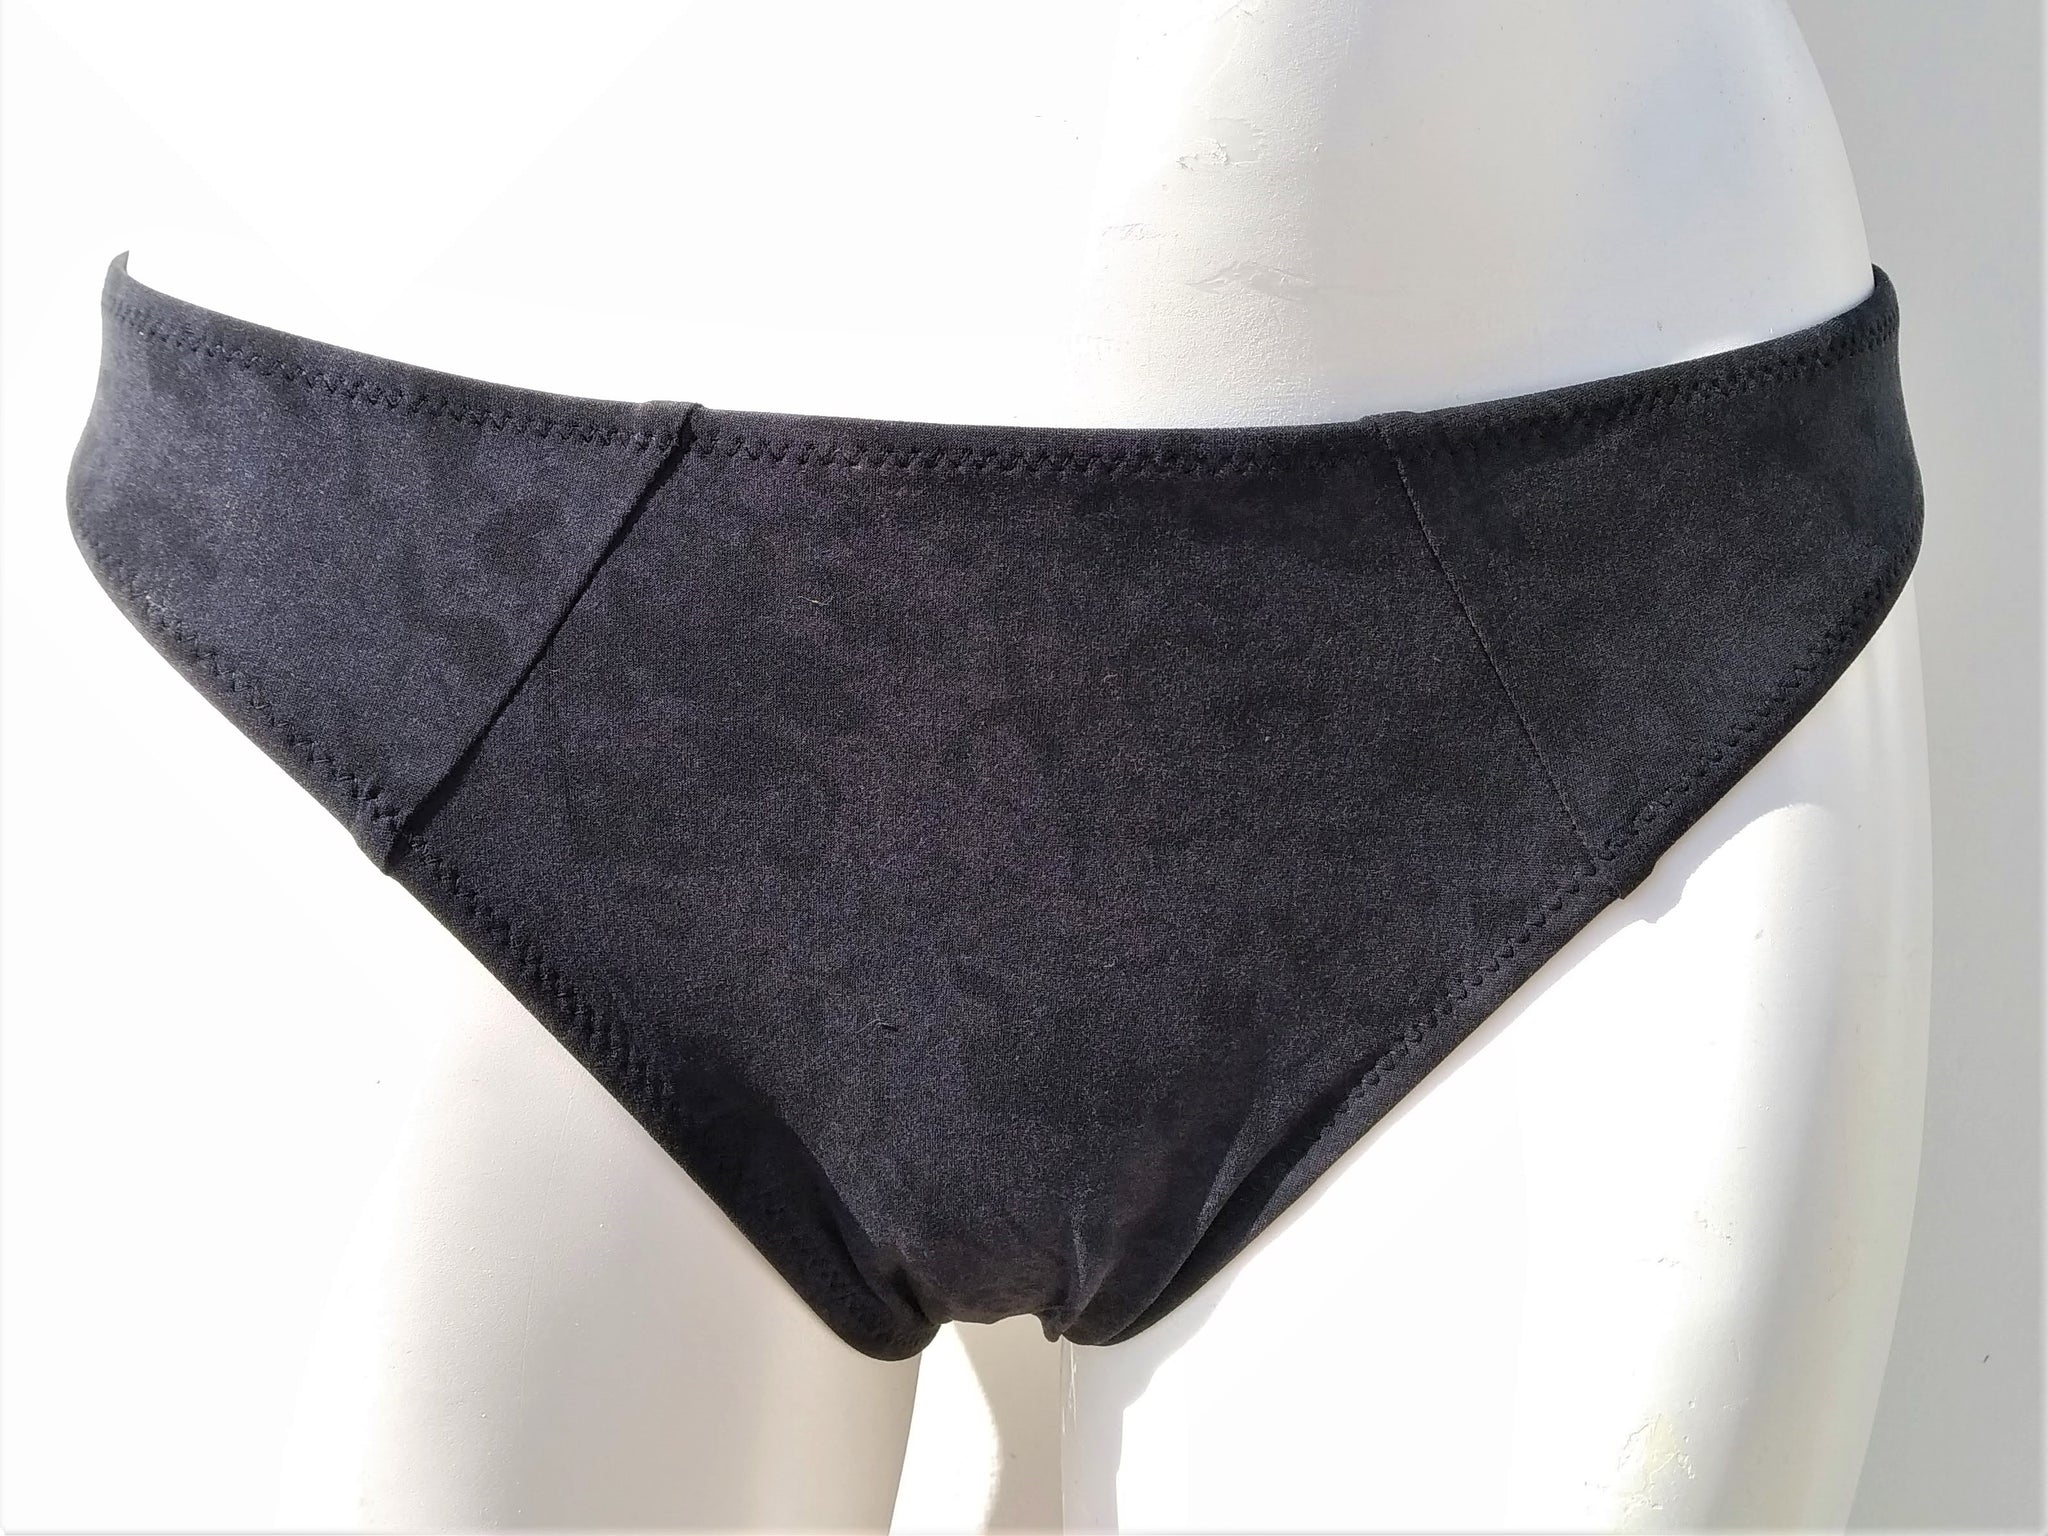 Black bikini bottom, regular cut, from Malibu beach model bikini. bikinn.com